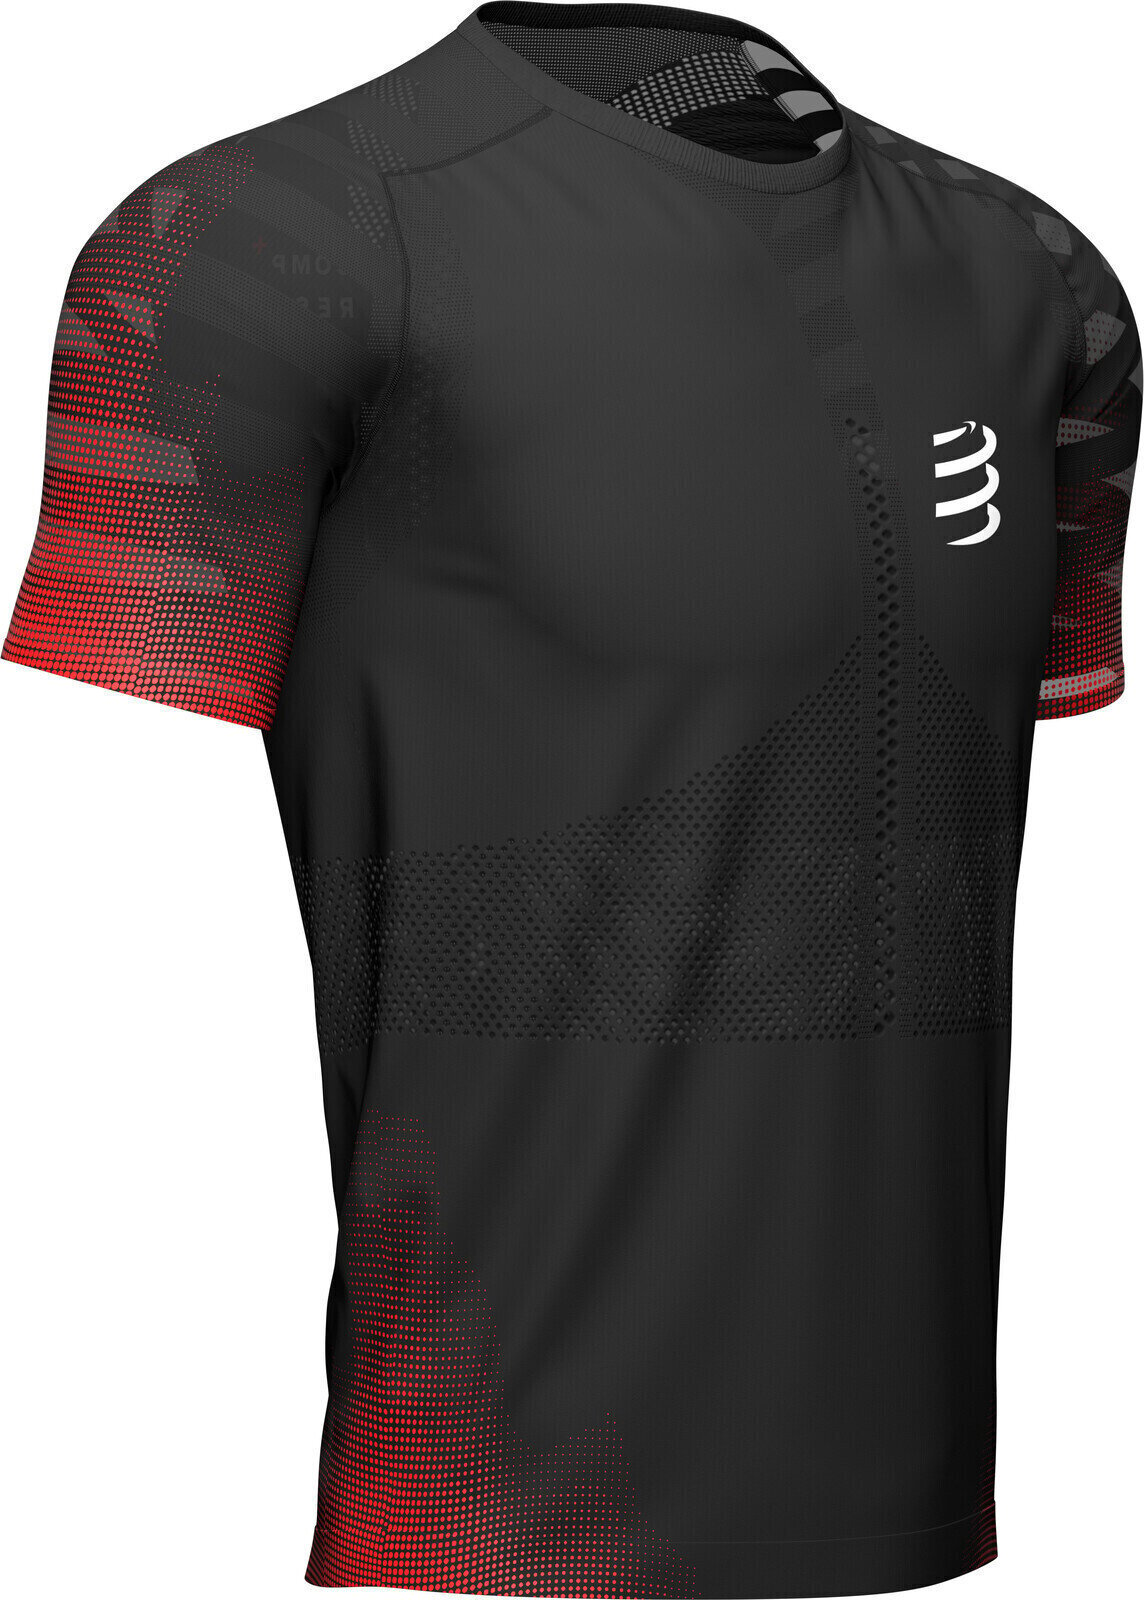 Laufshirt mit Kurzarm
 Compressport Racing SS T-Shirt Black S Laufshirt mit Kurzarm